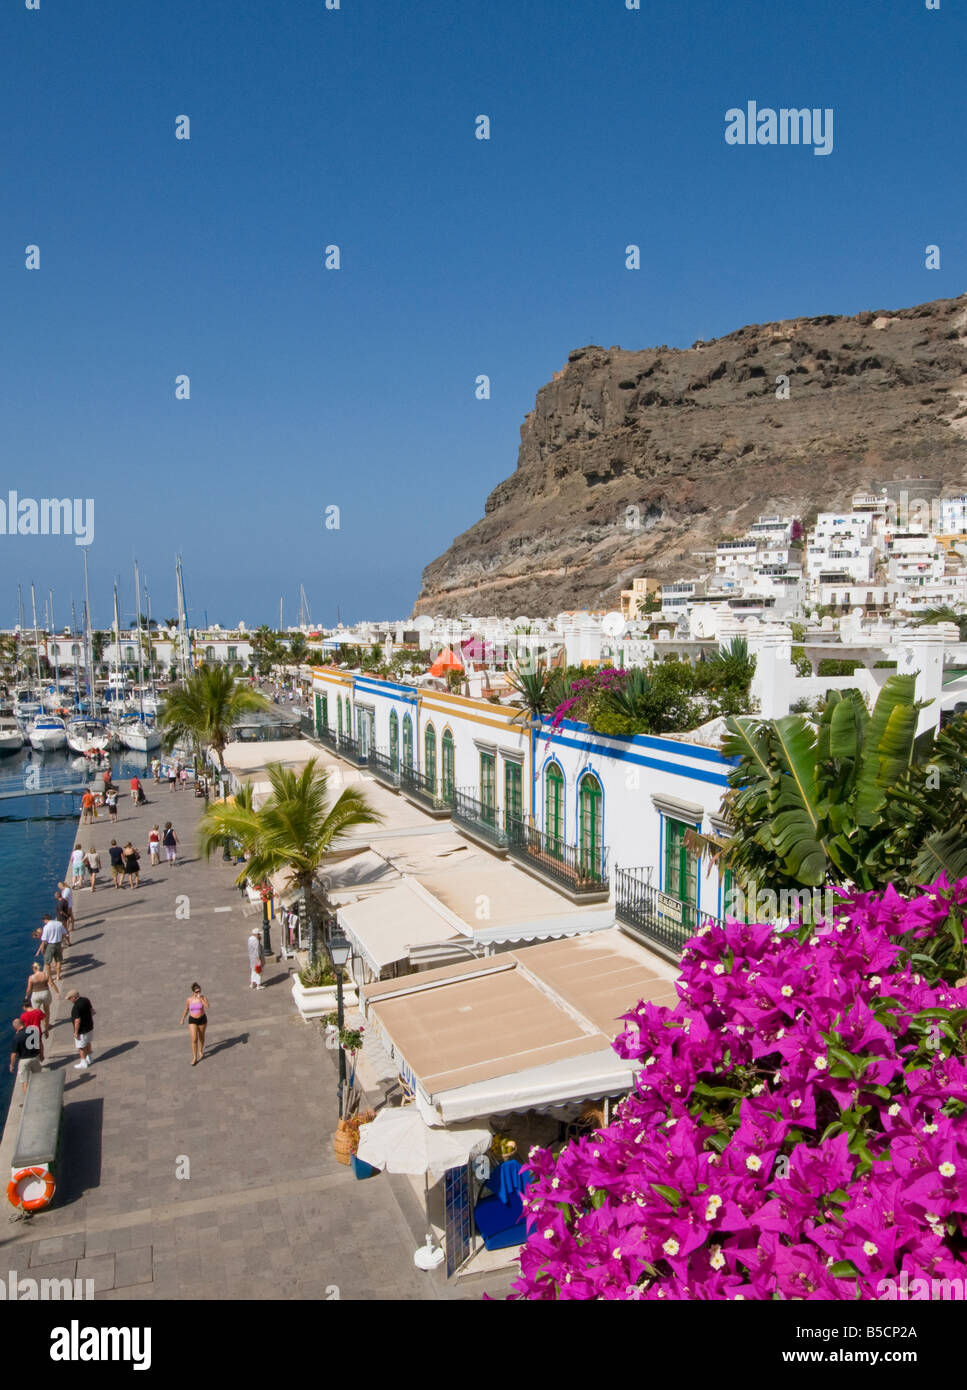 Puerto de Mogan View over luxury marina, promenade and restaurants at Puerto  de Mogan Gran Canaria Canary Islands Spain Stock Photo - Alamy